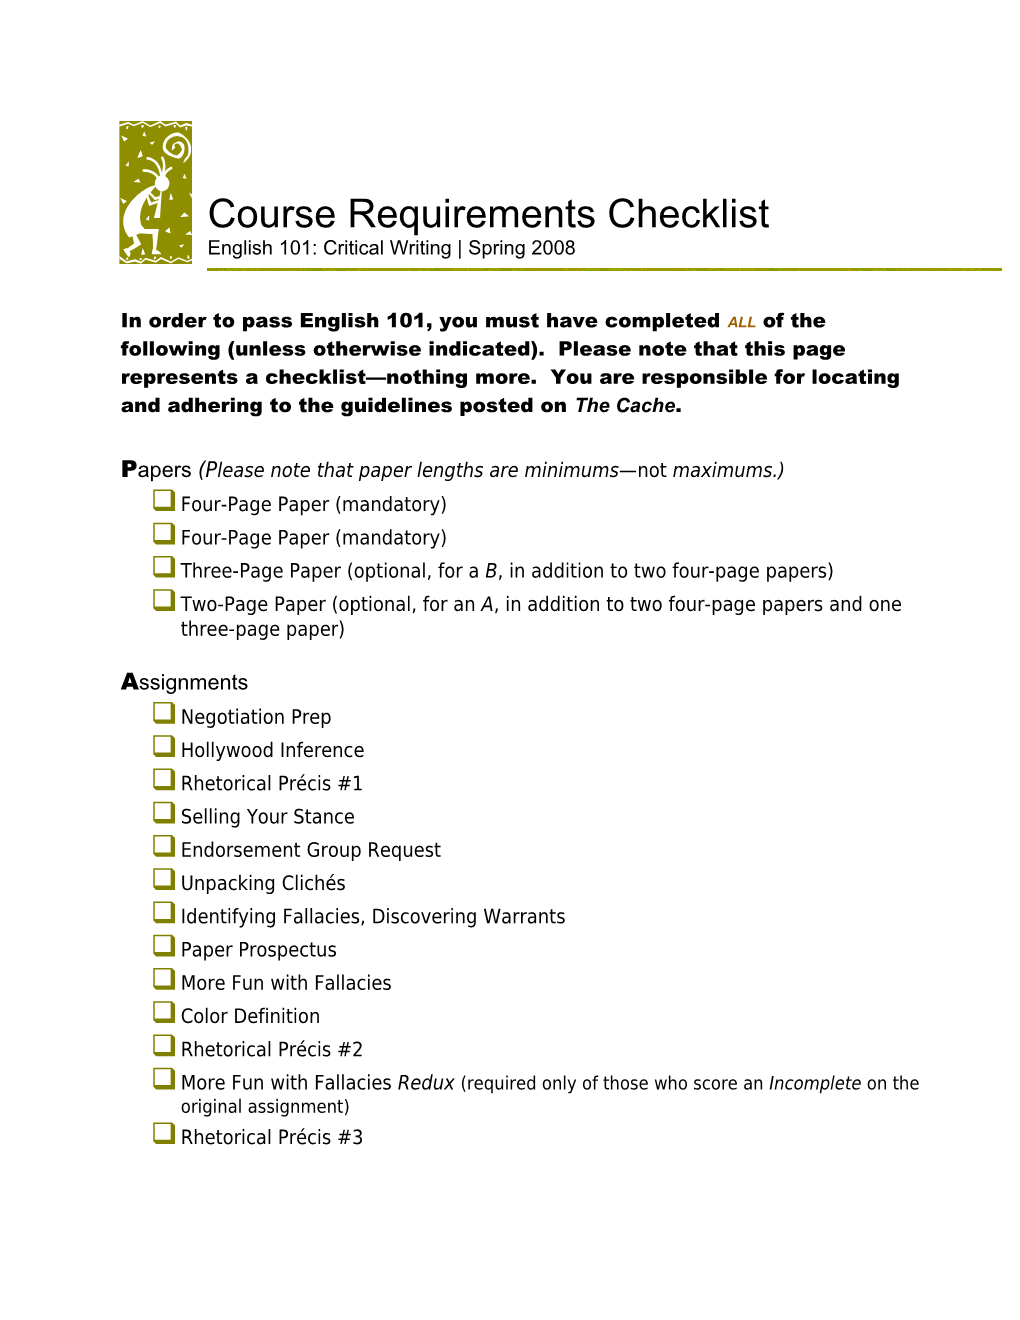 English 101: Course Requirements Checklist